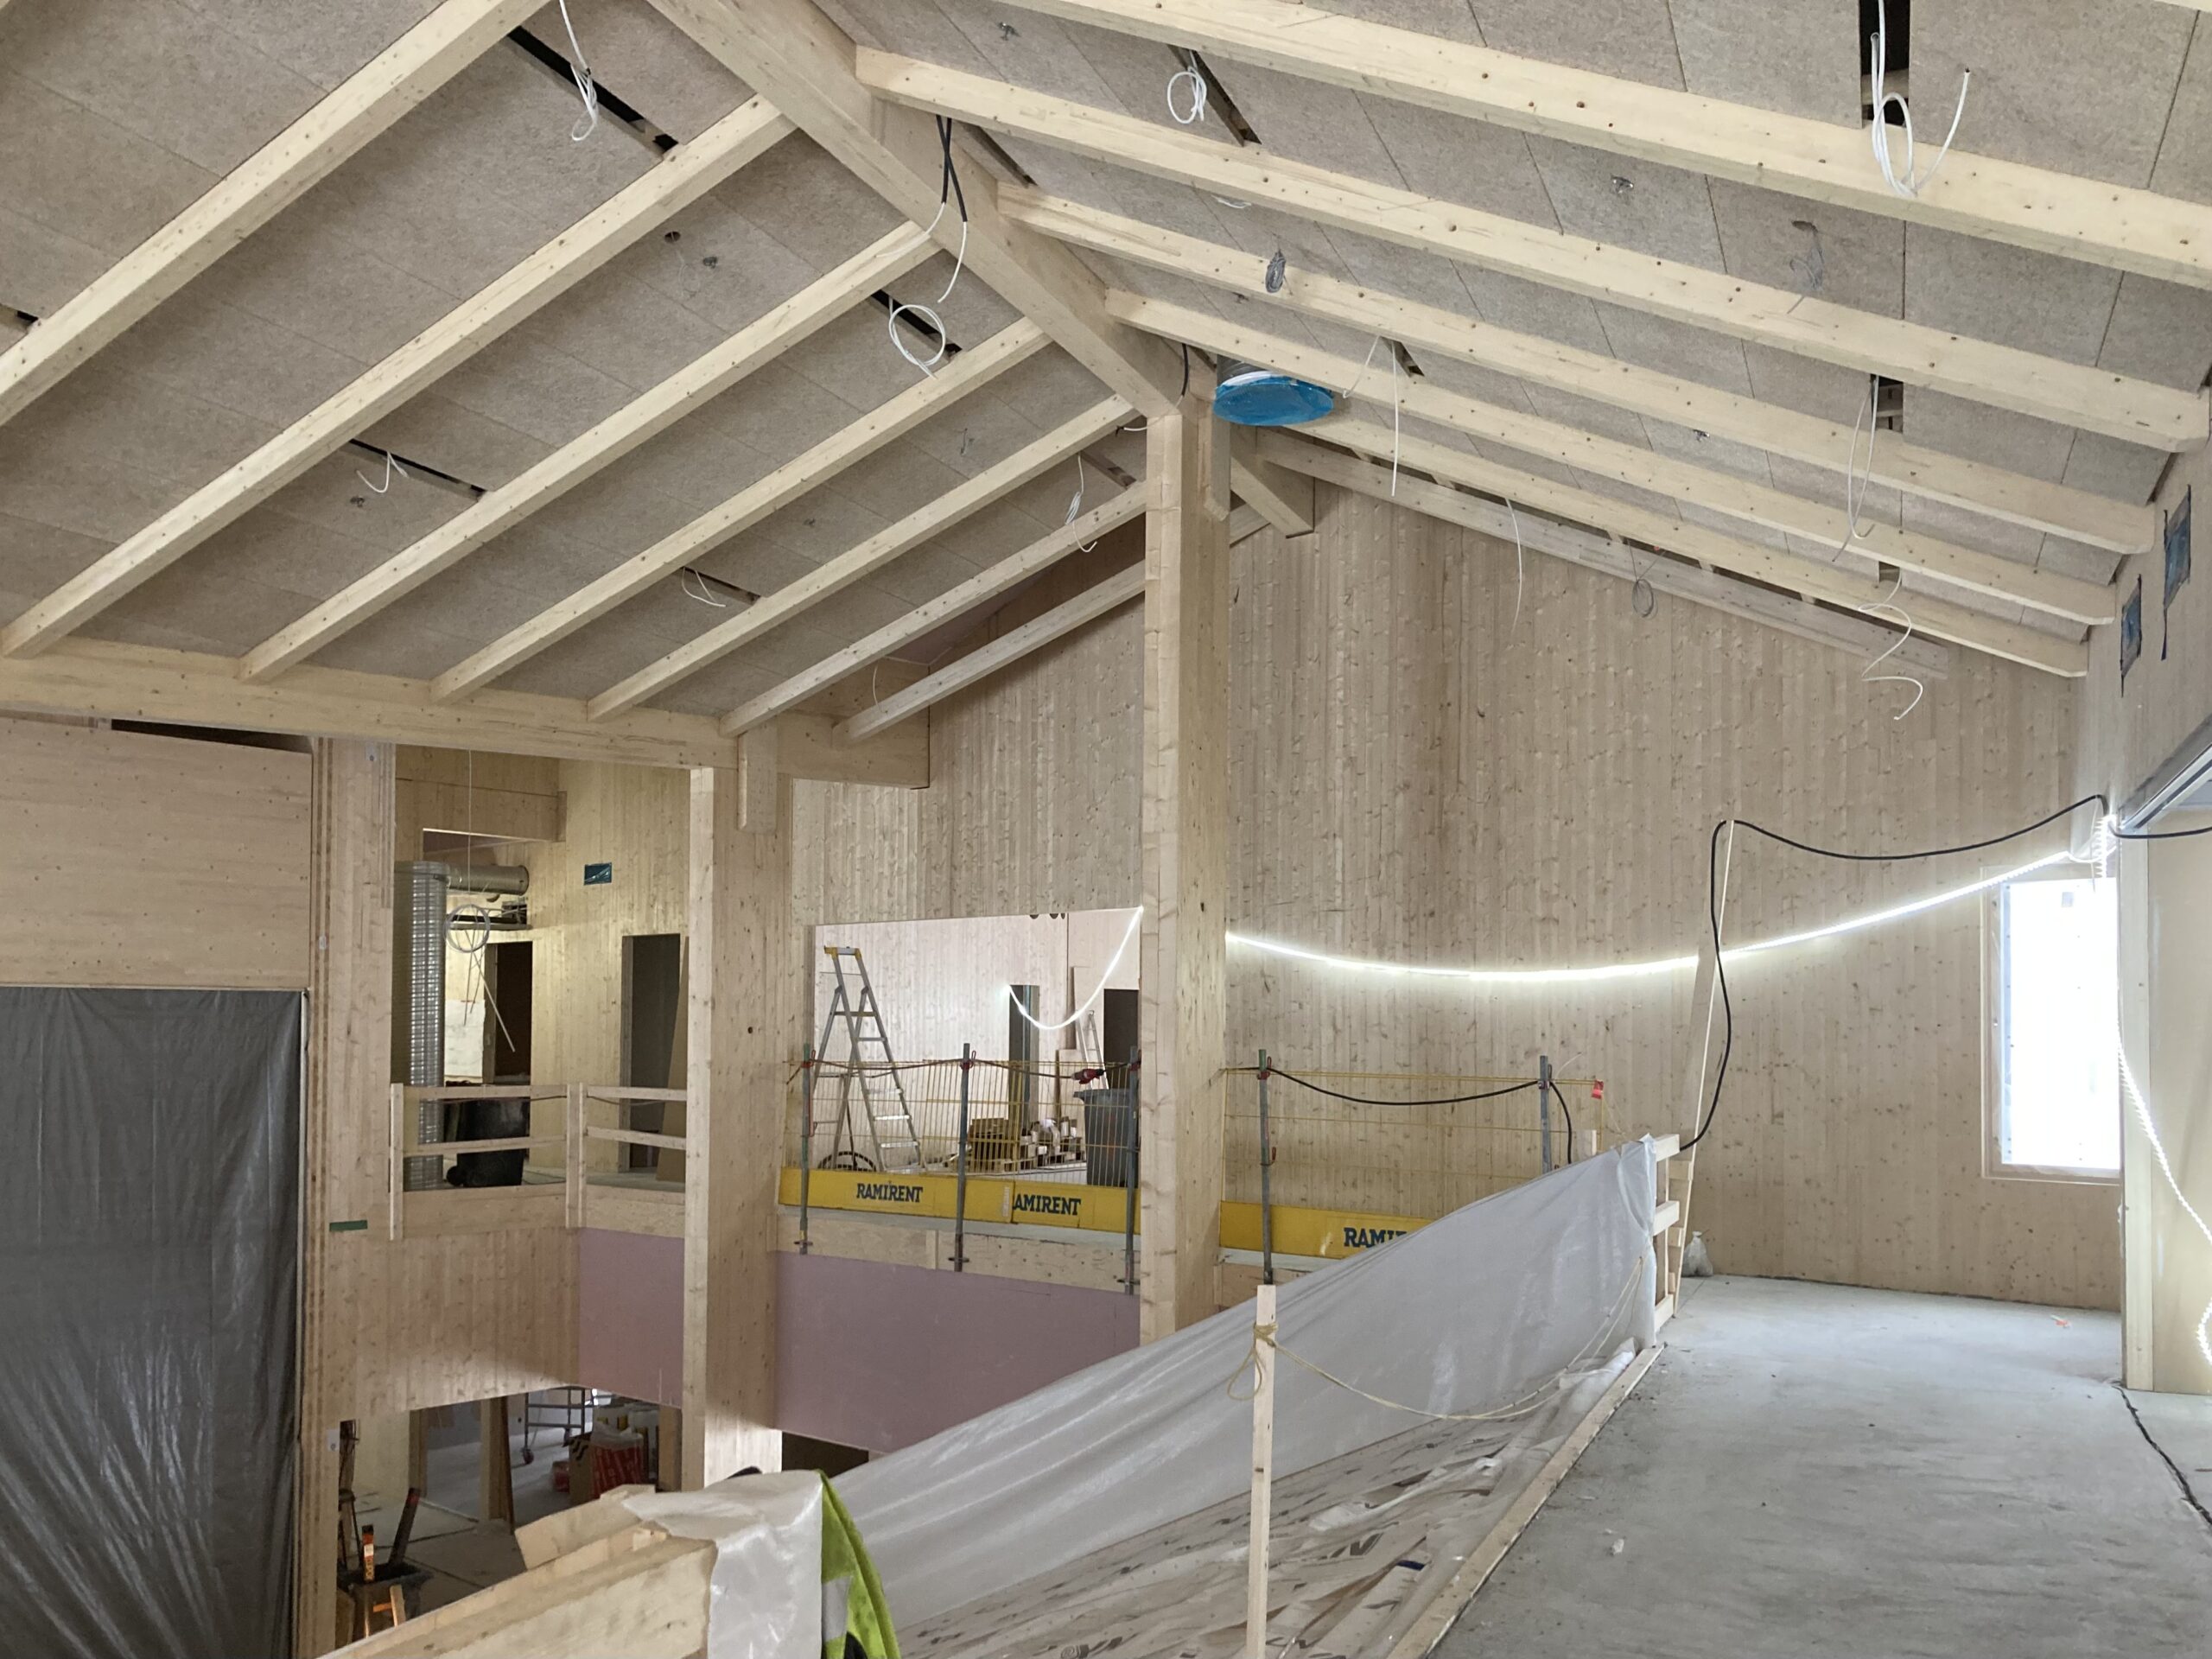 Interior of the new main building of the Järvenpää Professional Training Center under constructioon